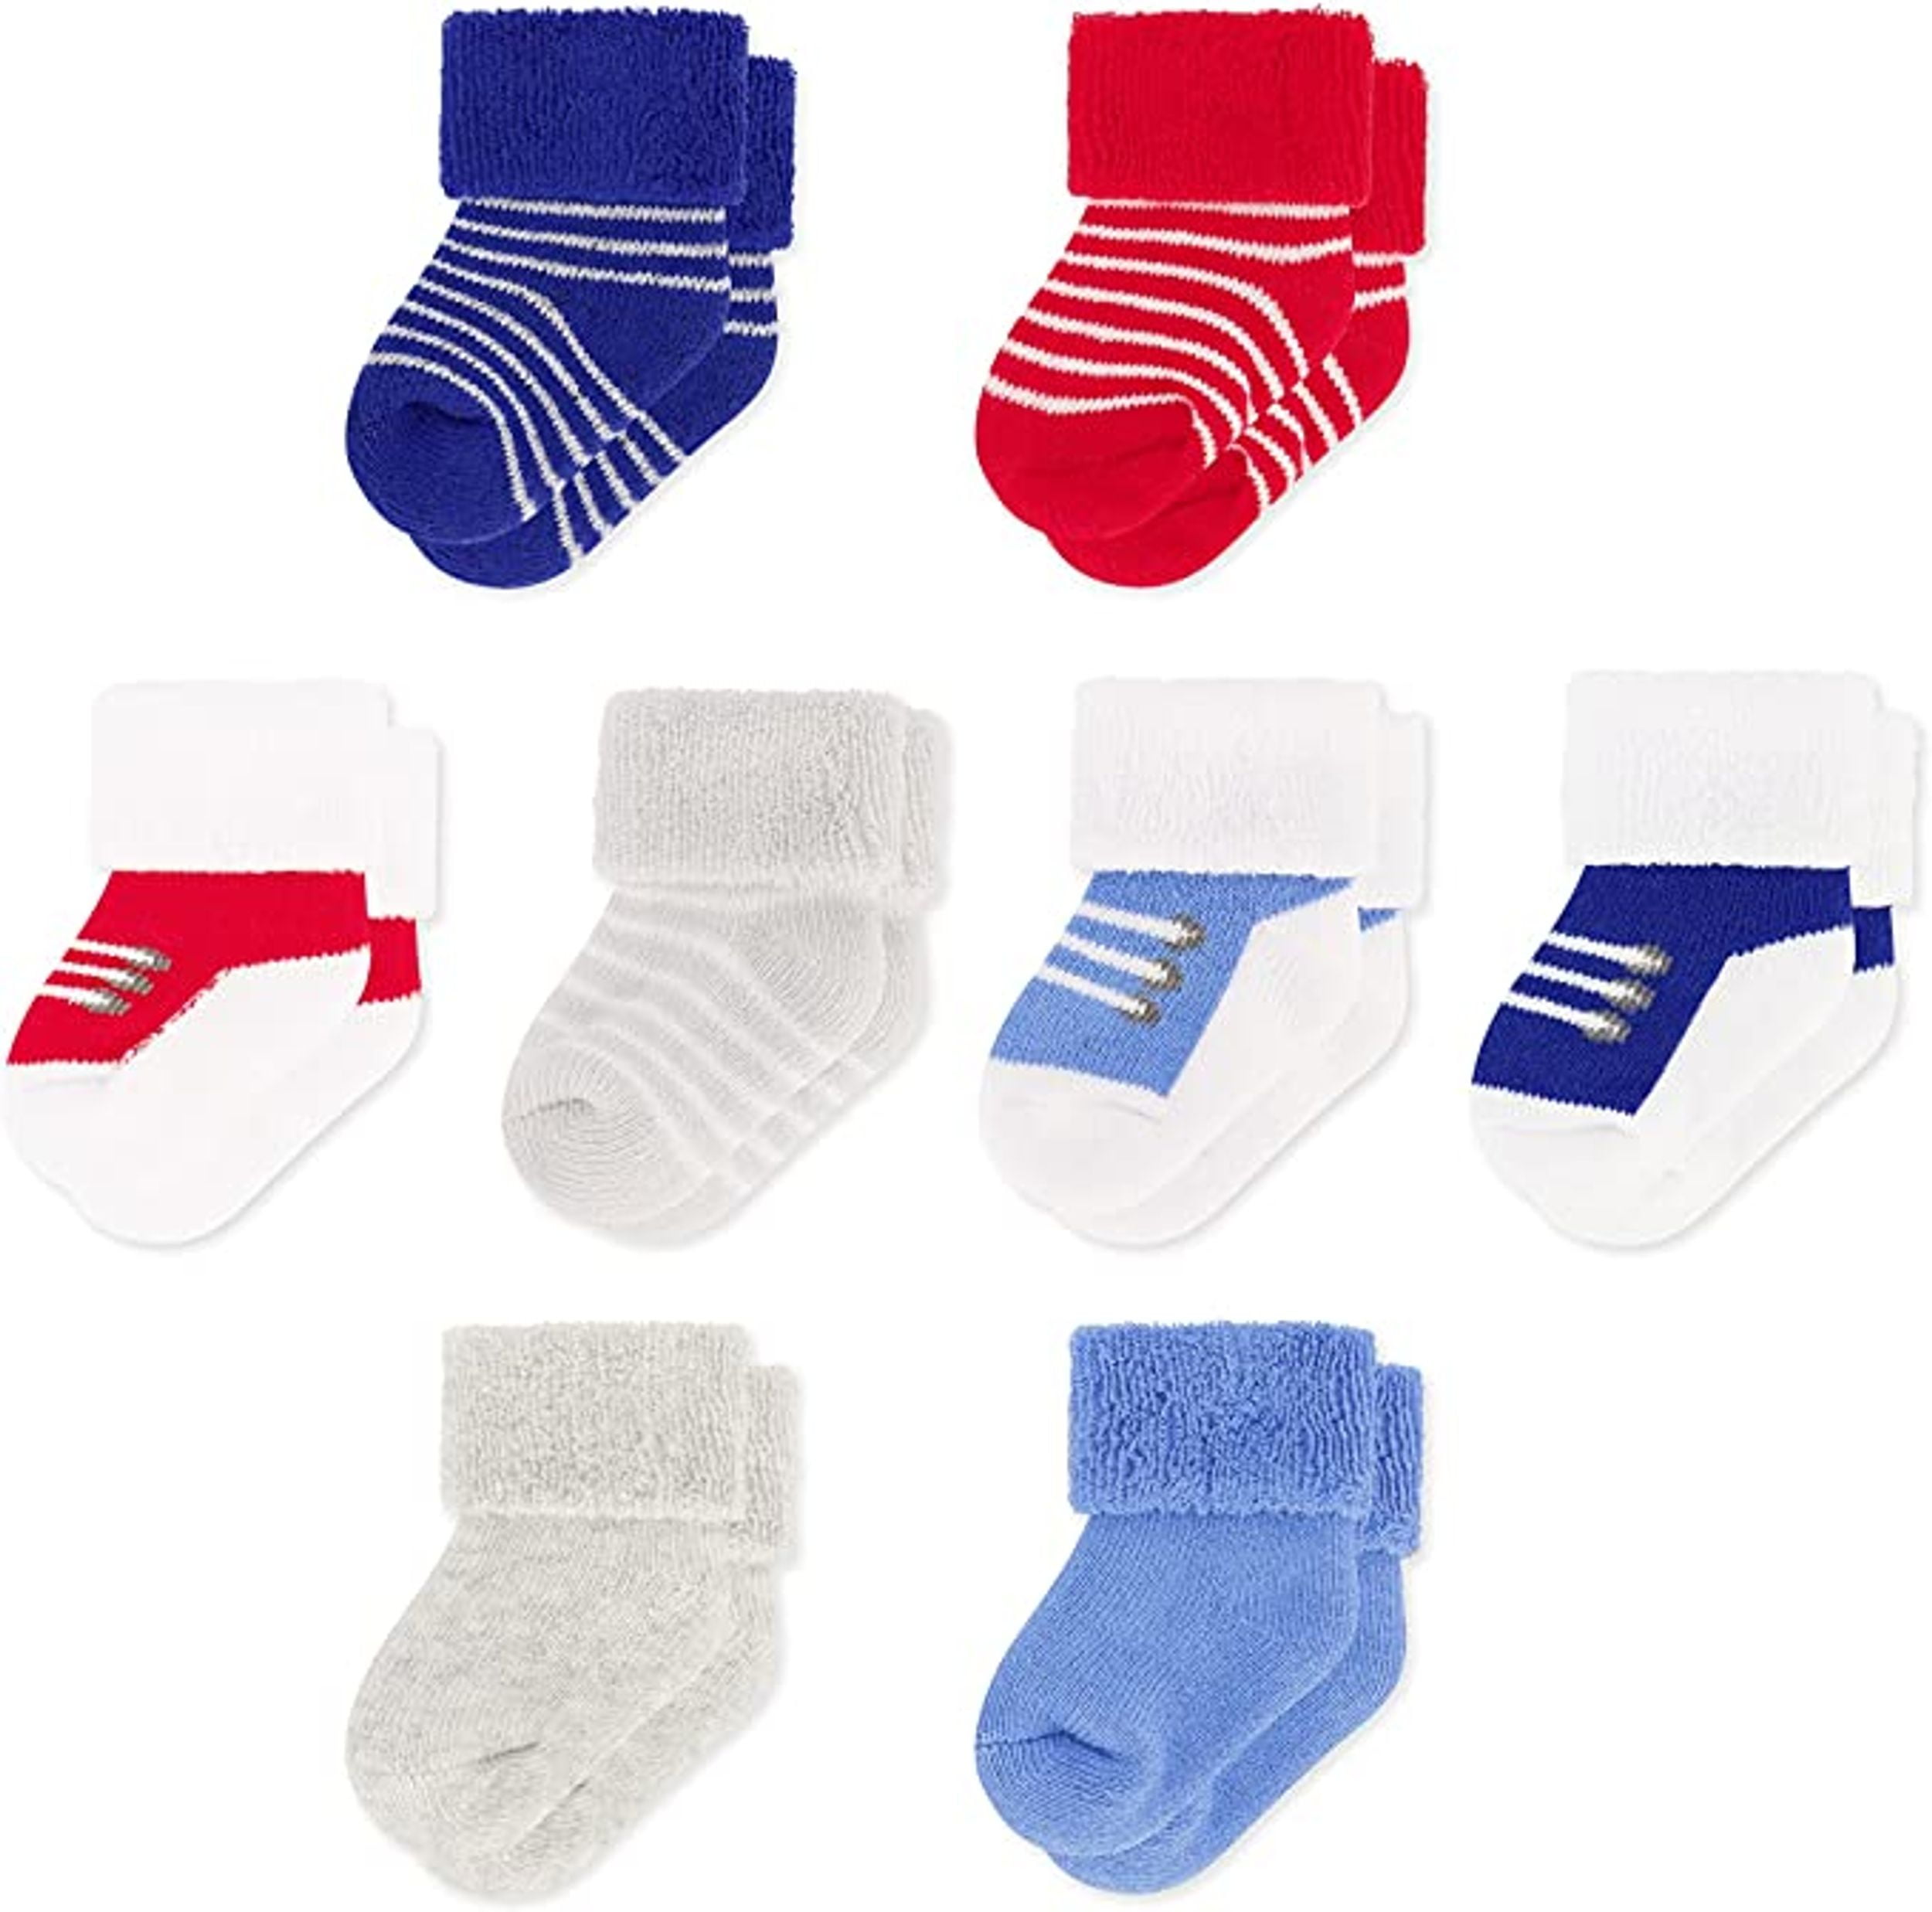 Nurses Choice Newborn Baby Boy & Girl Socks Includes 6 Pairs of Cotton Socks